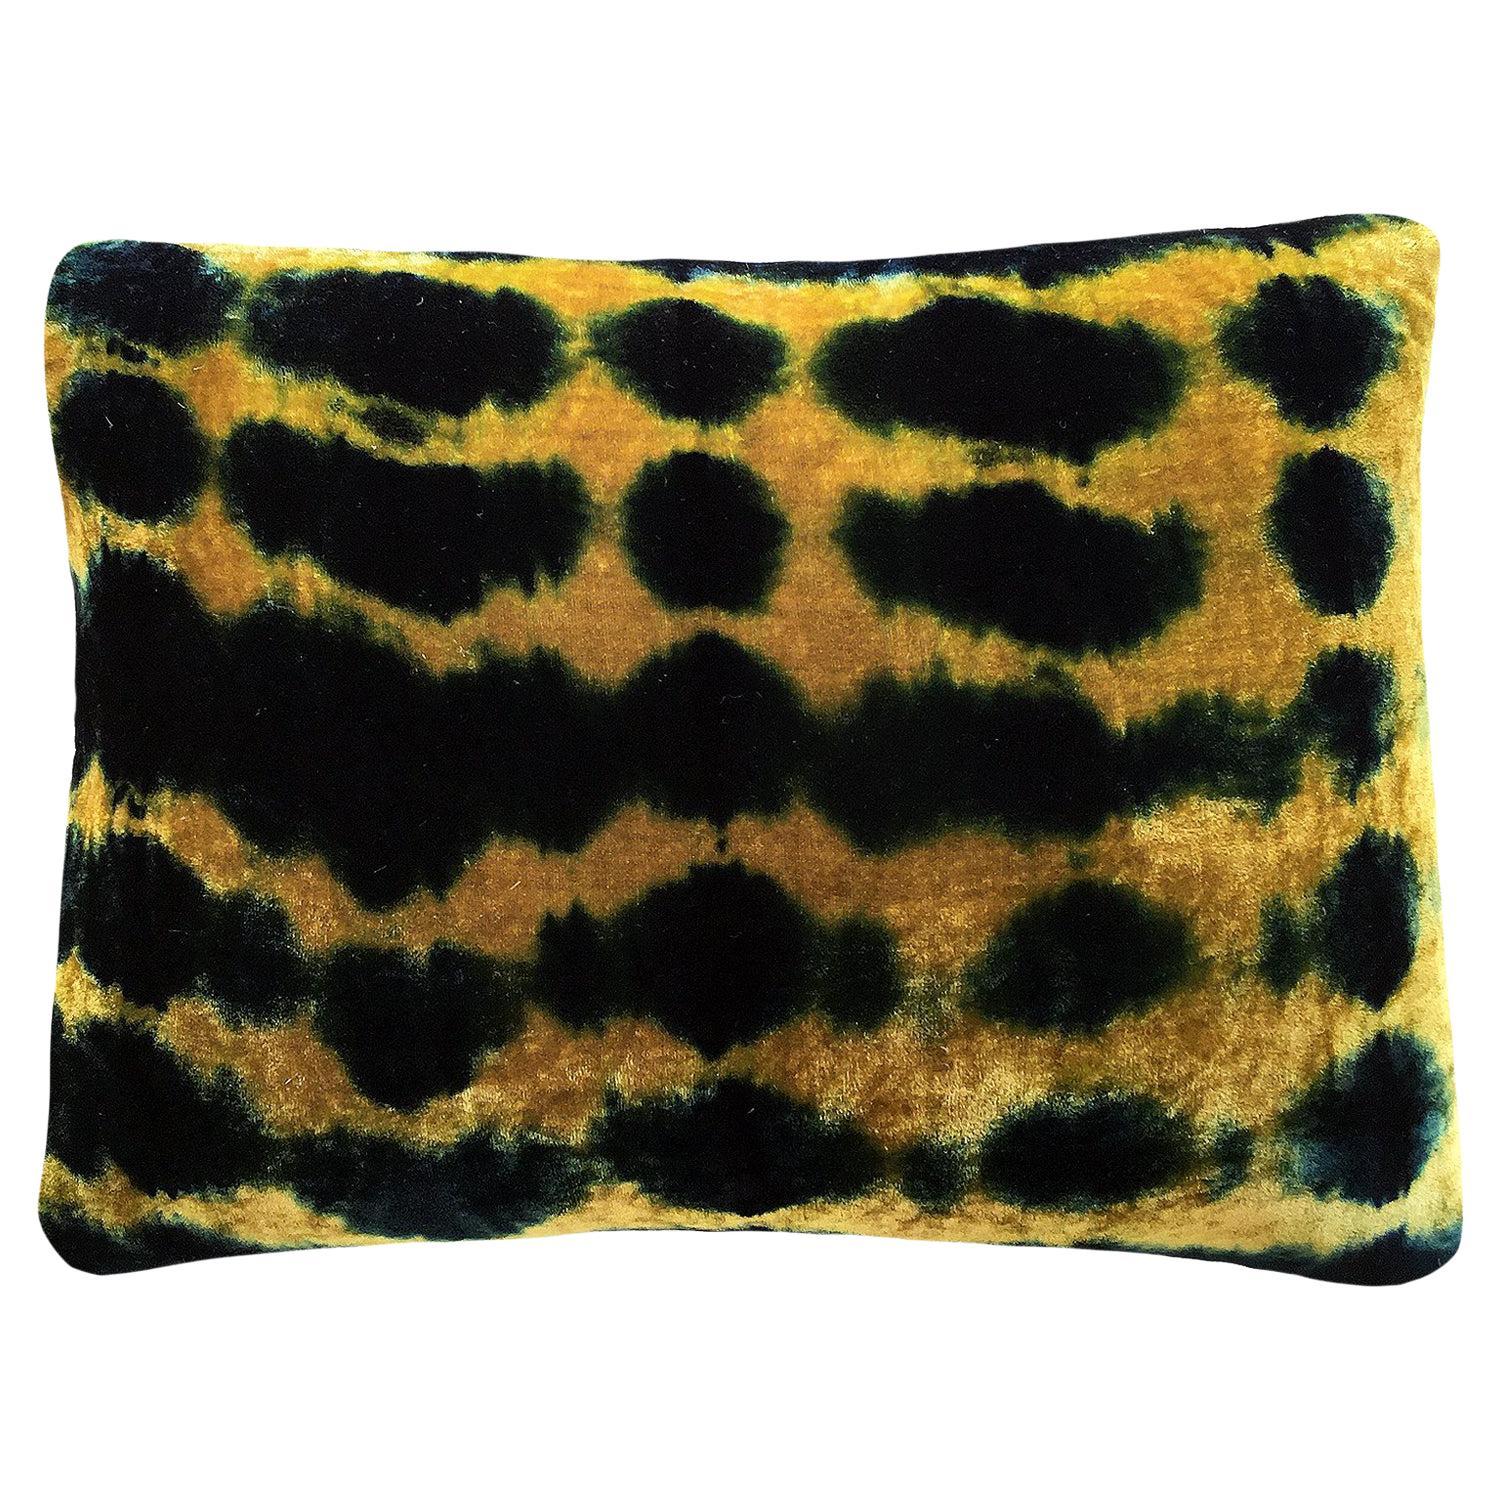 Hand-dyed Velvet Throw Pillow in Yellow Gold & Indigo Blue Inkblot Pattern